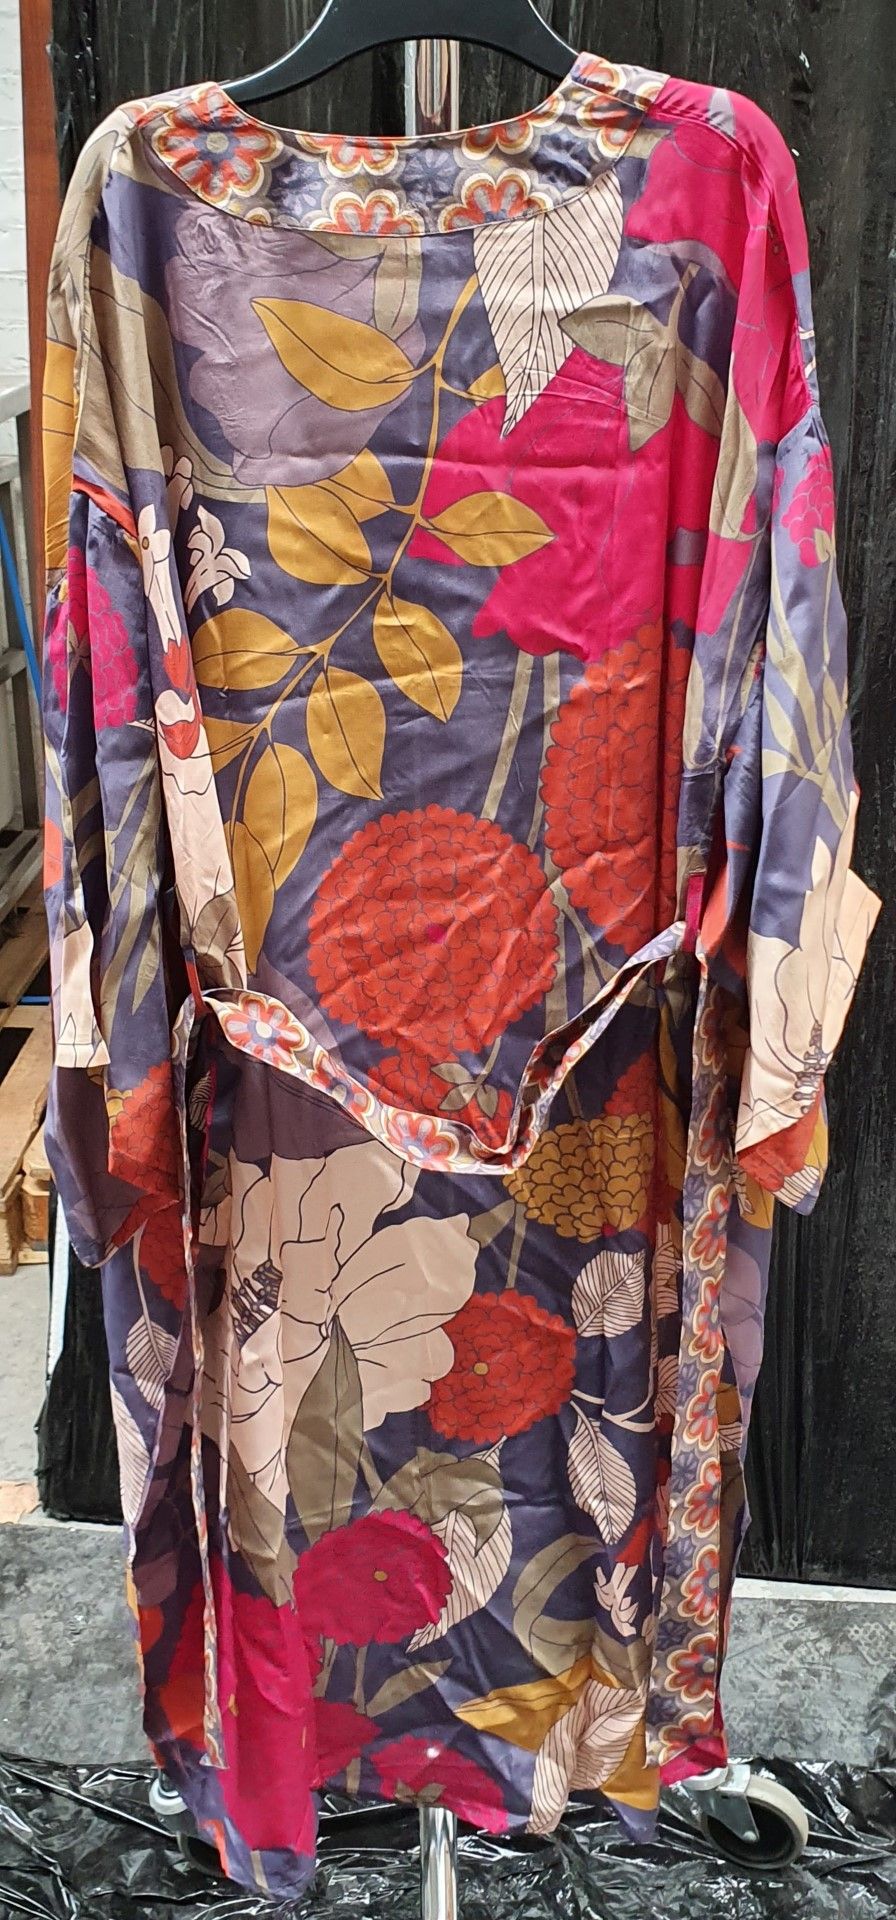 6 x Powder Kimono Style Gowns and 1 x Scarf - Folk Art Petal Finish 100% Viscose Fabric - Adult - Image 15 of 22